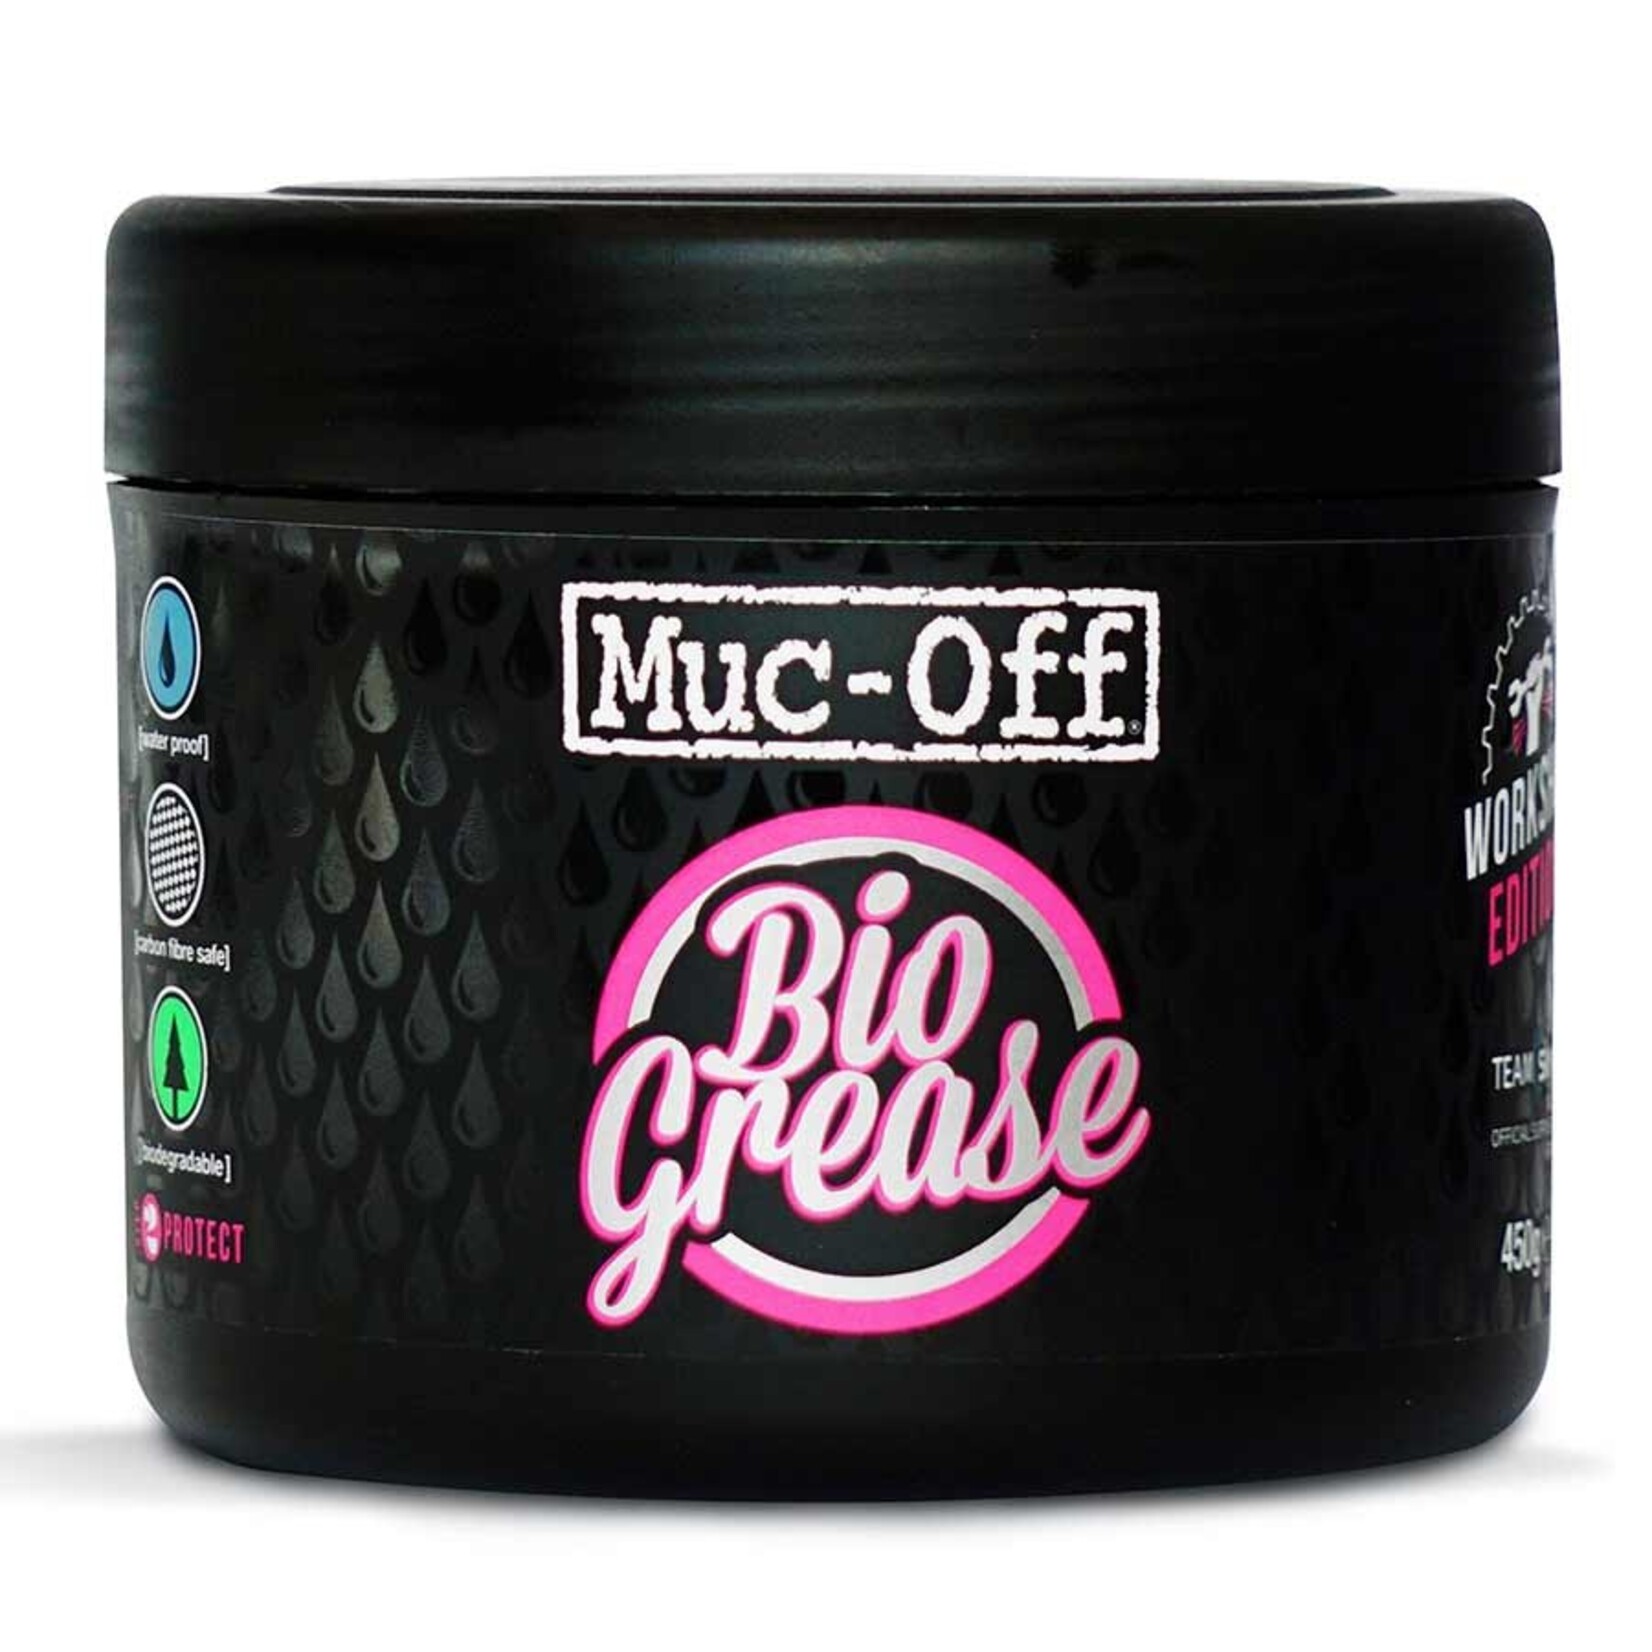 MUC-OFF Muc-Off Bio Grease 450g